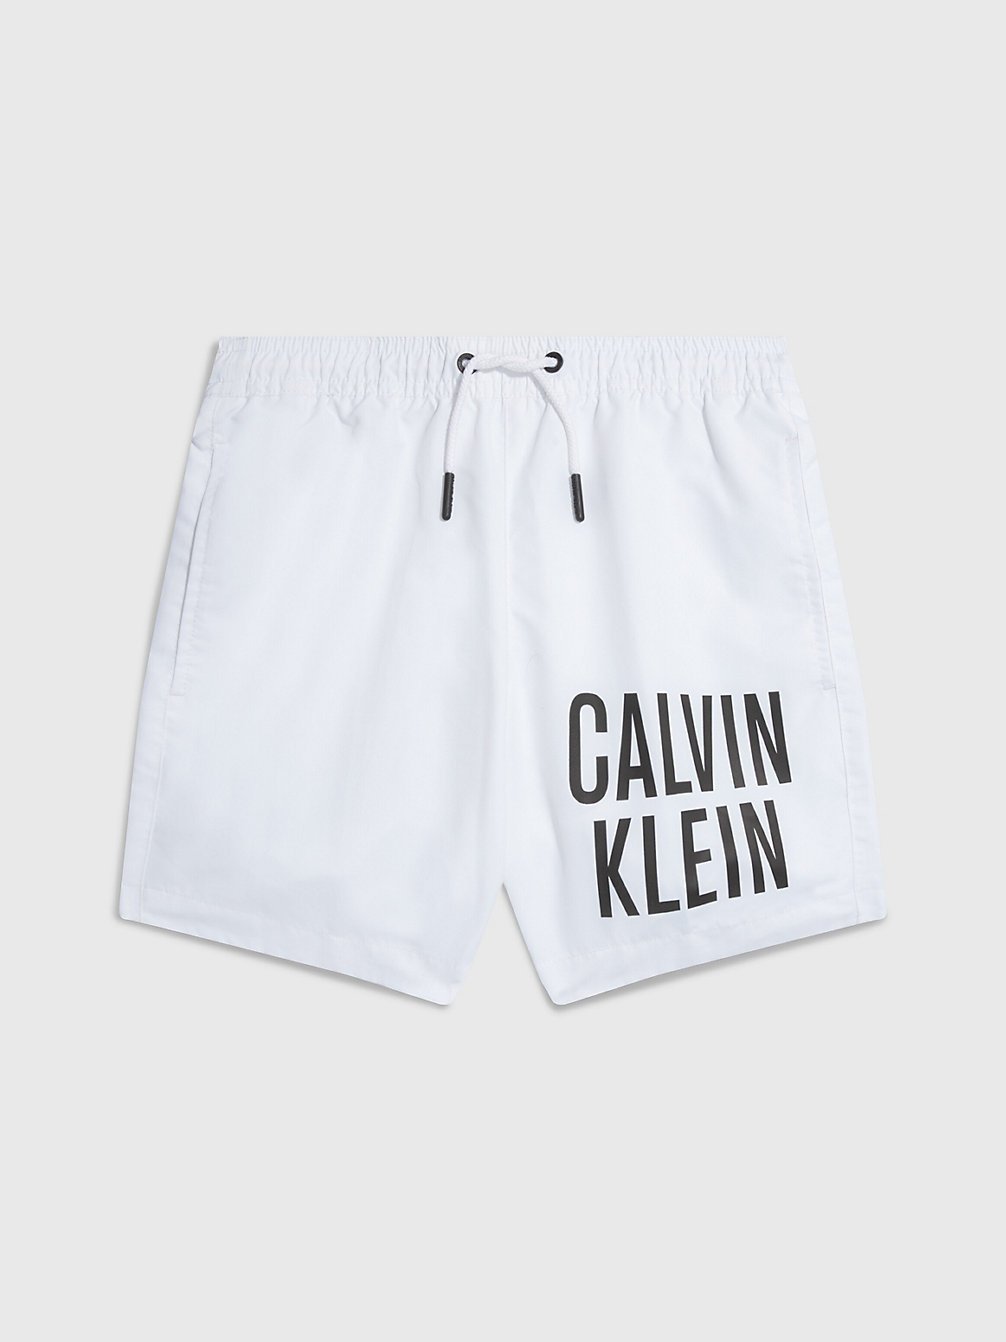 PVH CLASSIC WHITE Boys Swim Shorts - Intense Power undefined boys Calvin Klein